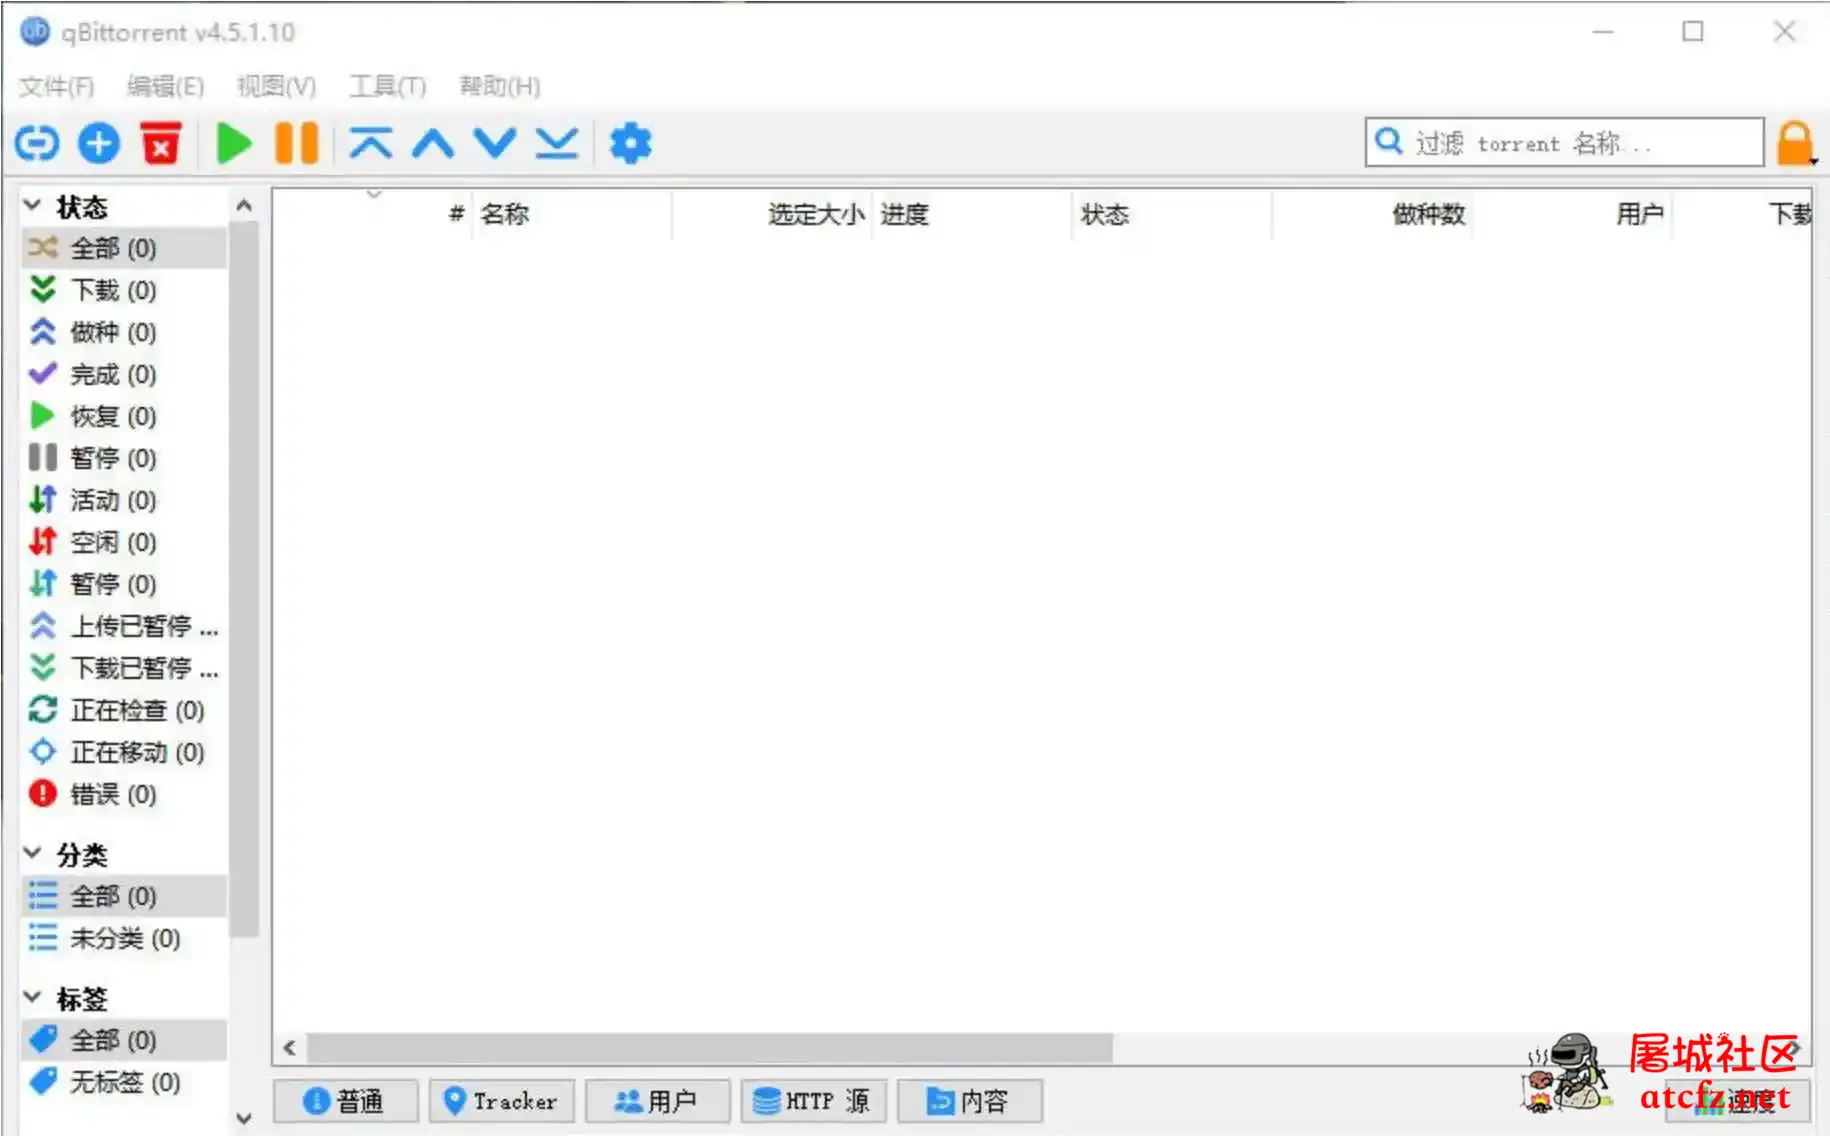 qBittorrent v4.5.3.10增强便携版BT种子下载工具 屠城辅助网www.tcfz1.com7656